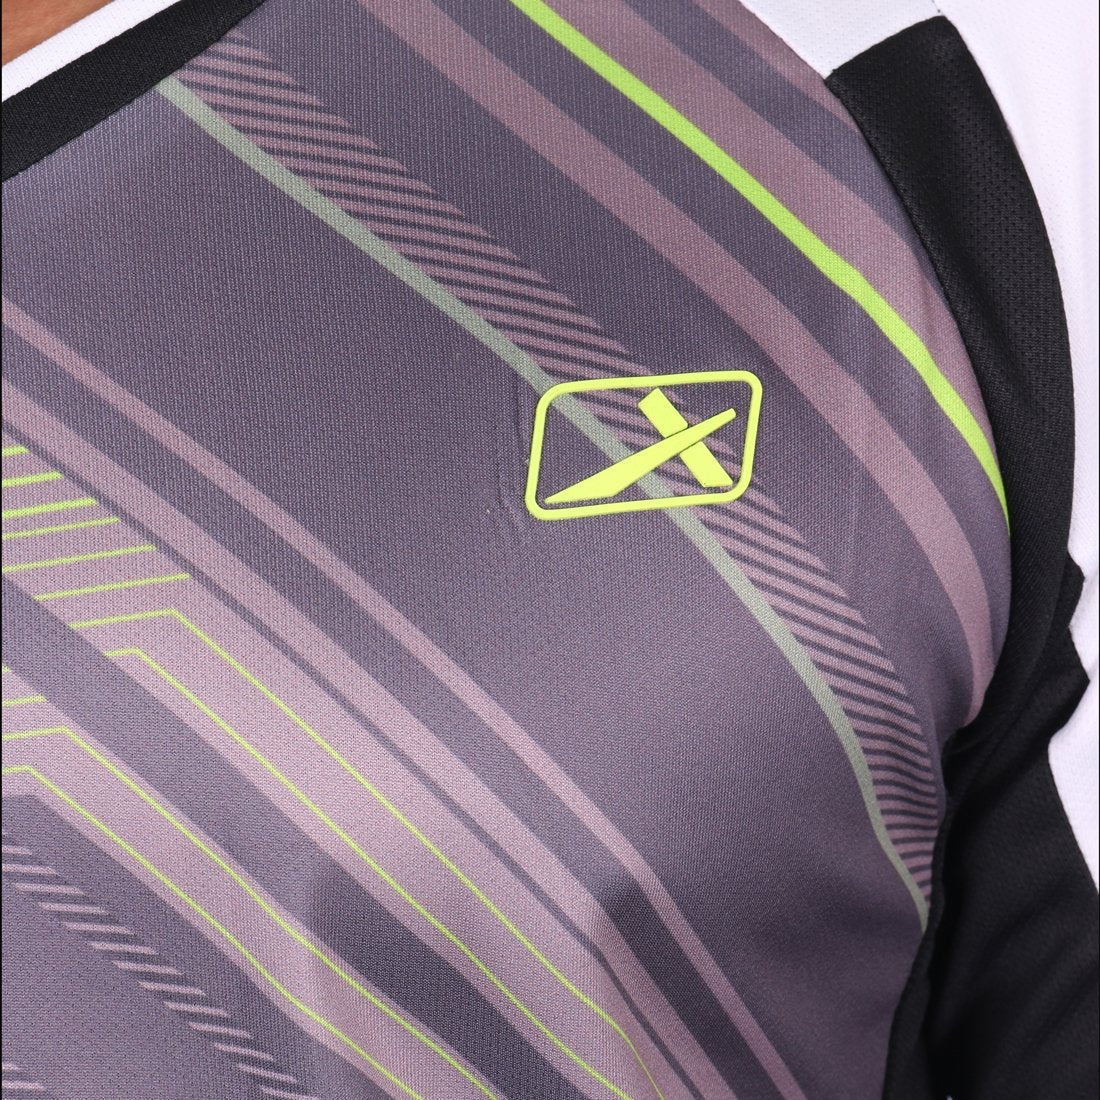 Vector X VRS-004 Polyester Half Sleeves T-Shirt, Men's (Black/White) - Best Price online Prokicksports.com